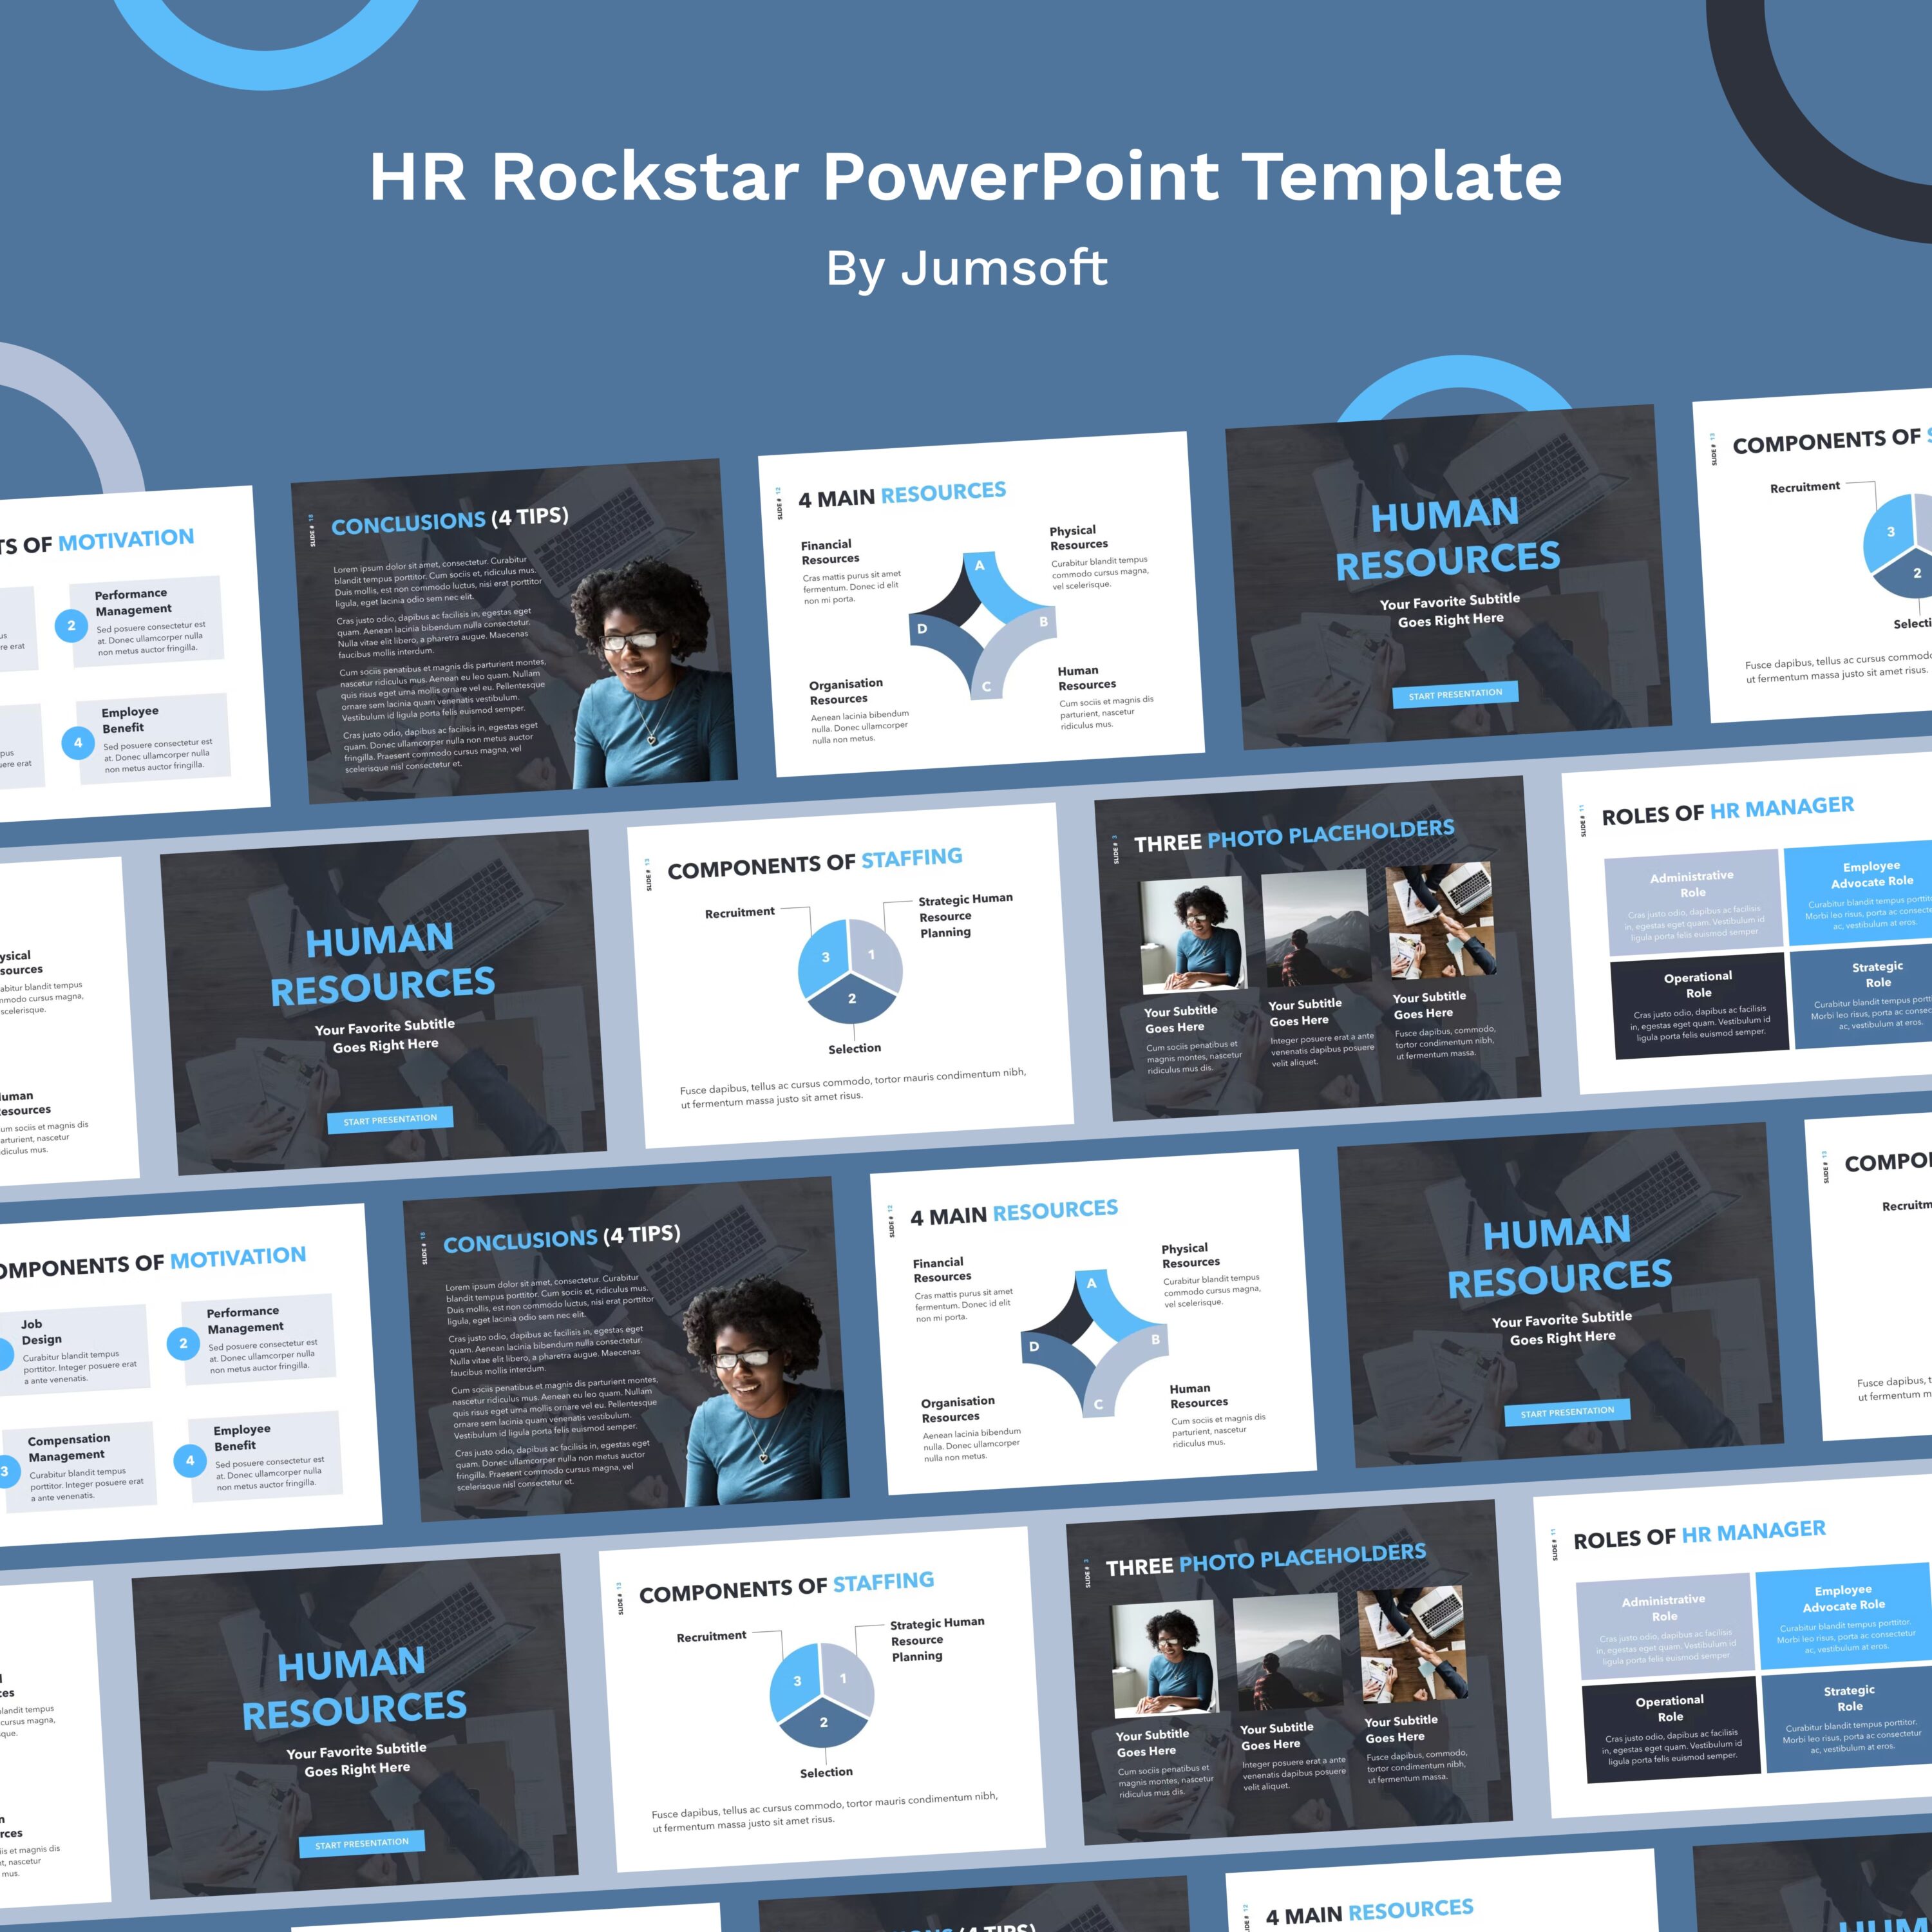 HR Rockstar PowerPoint Template cover.